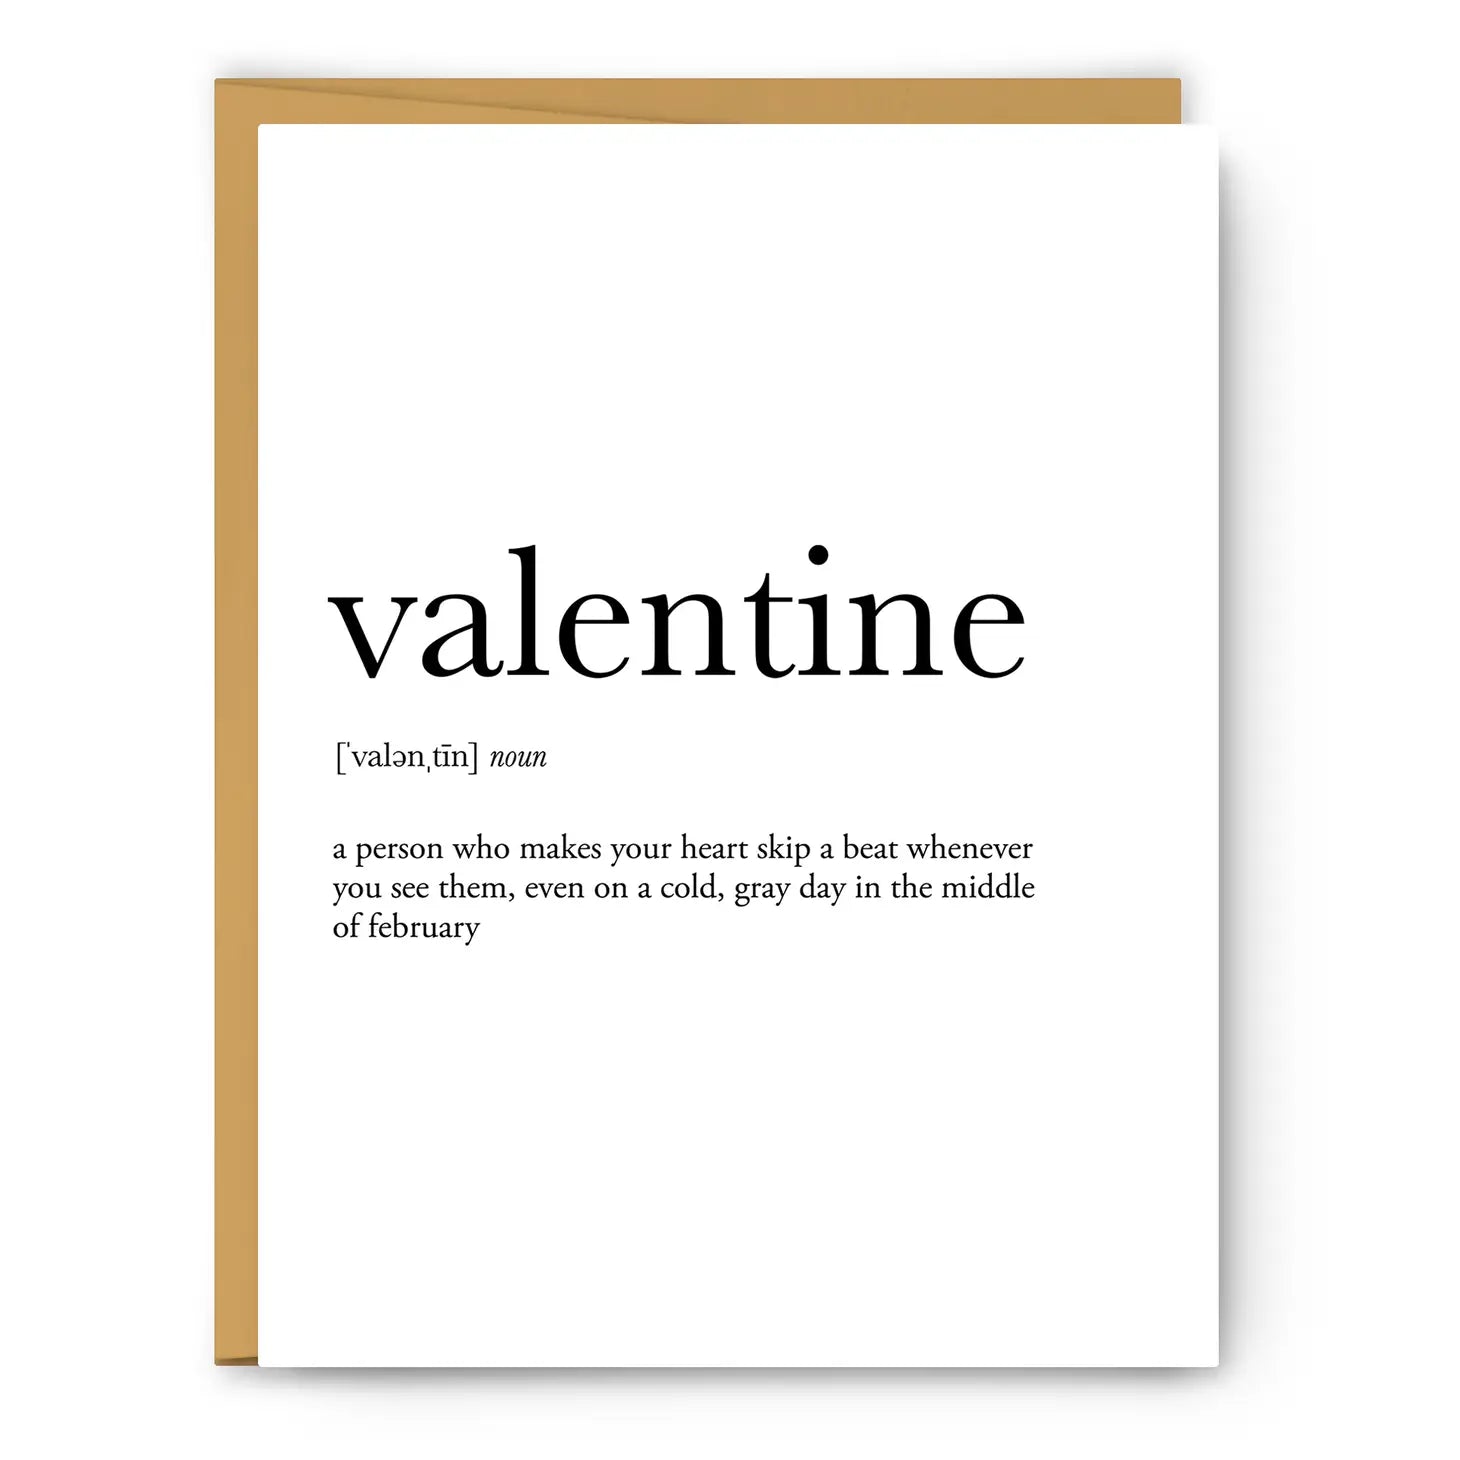 Definition Greeting Card: Valentine